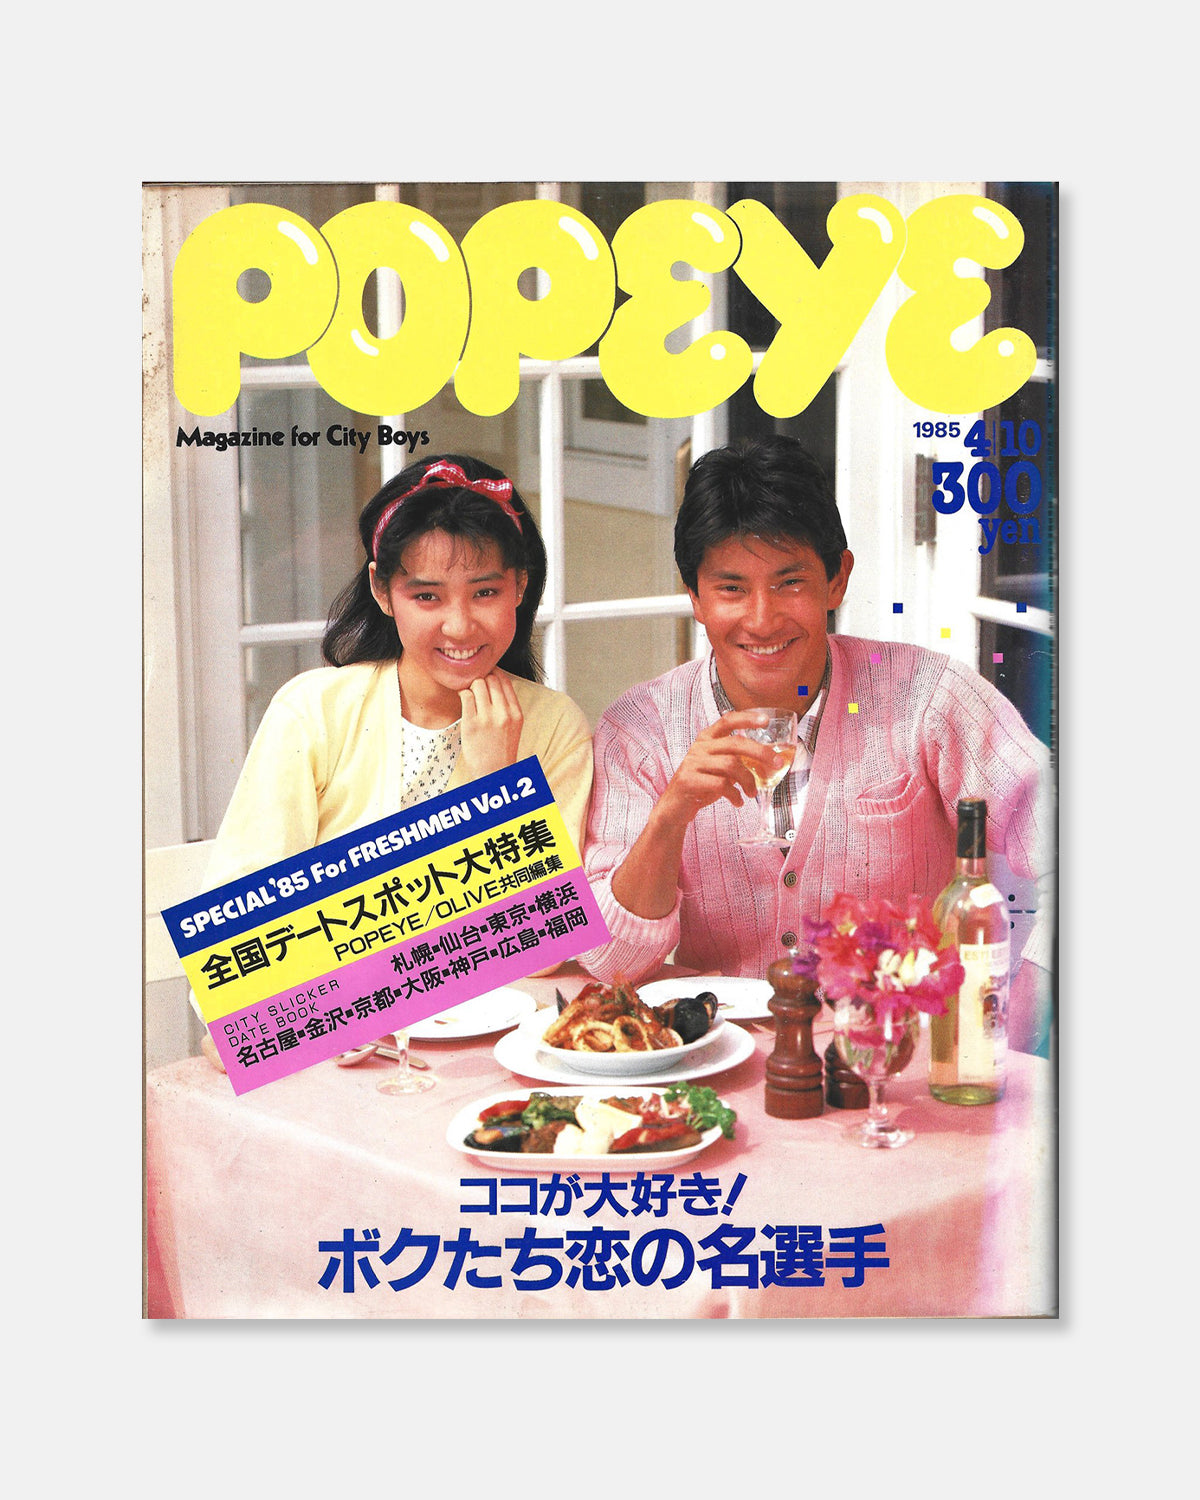 Popeye Magazine April 1985 (#196)